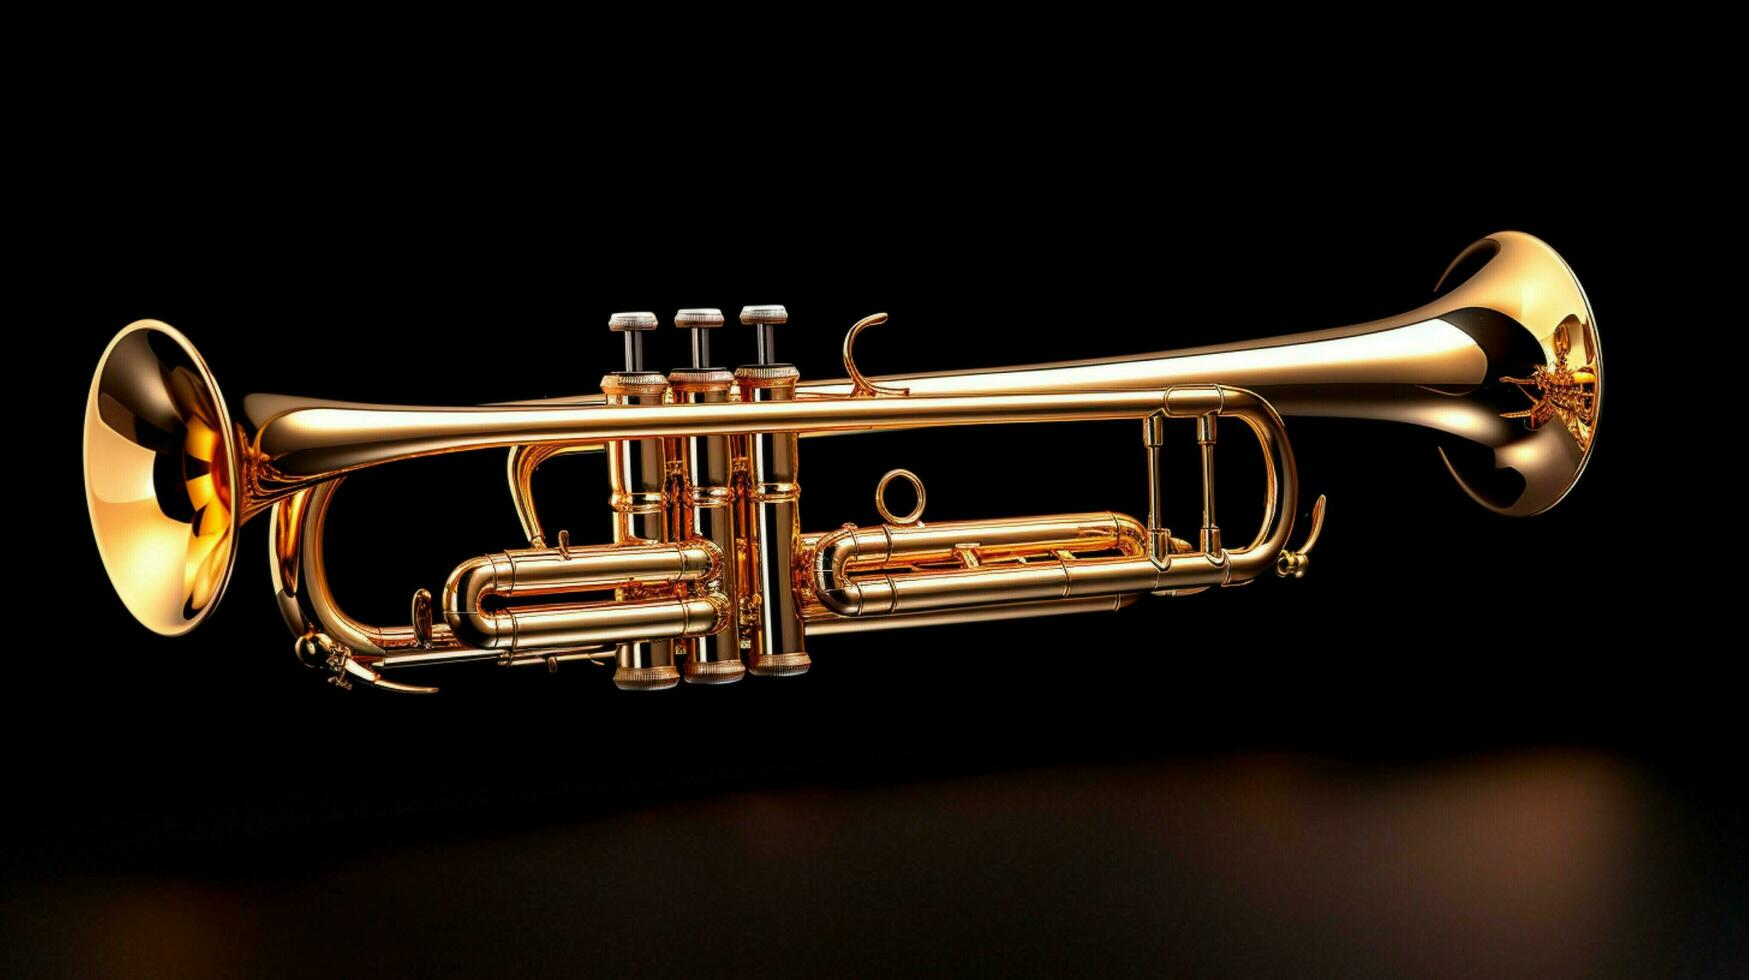 shiny brass trumpet golden style instrument photo